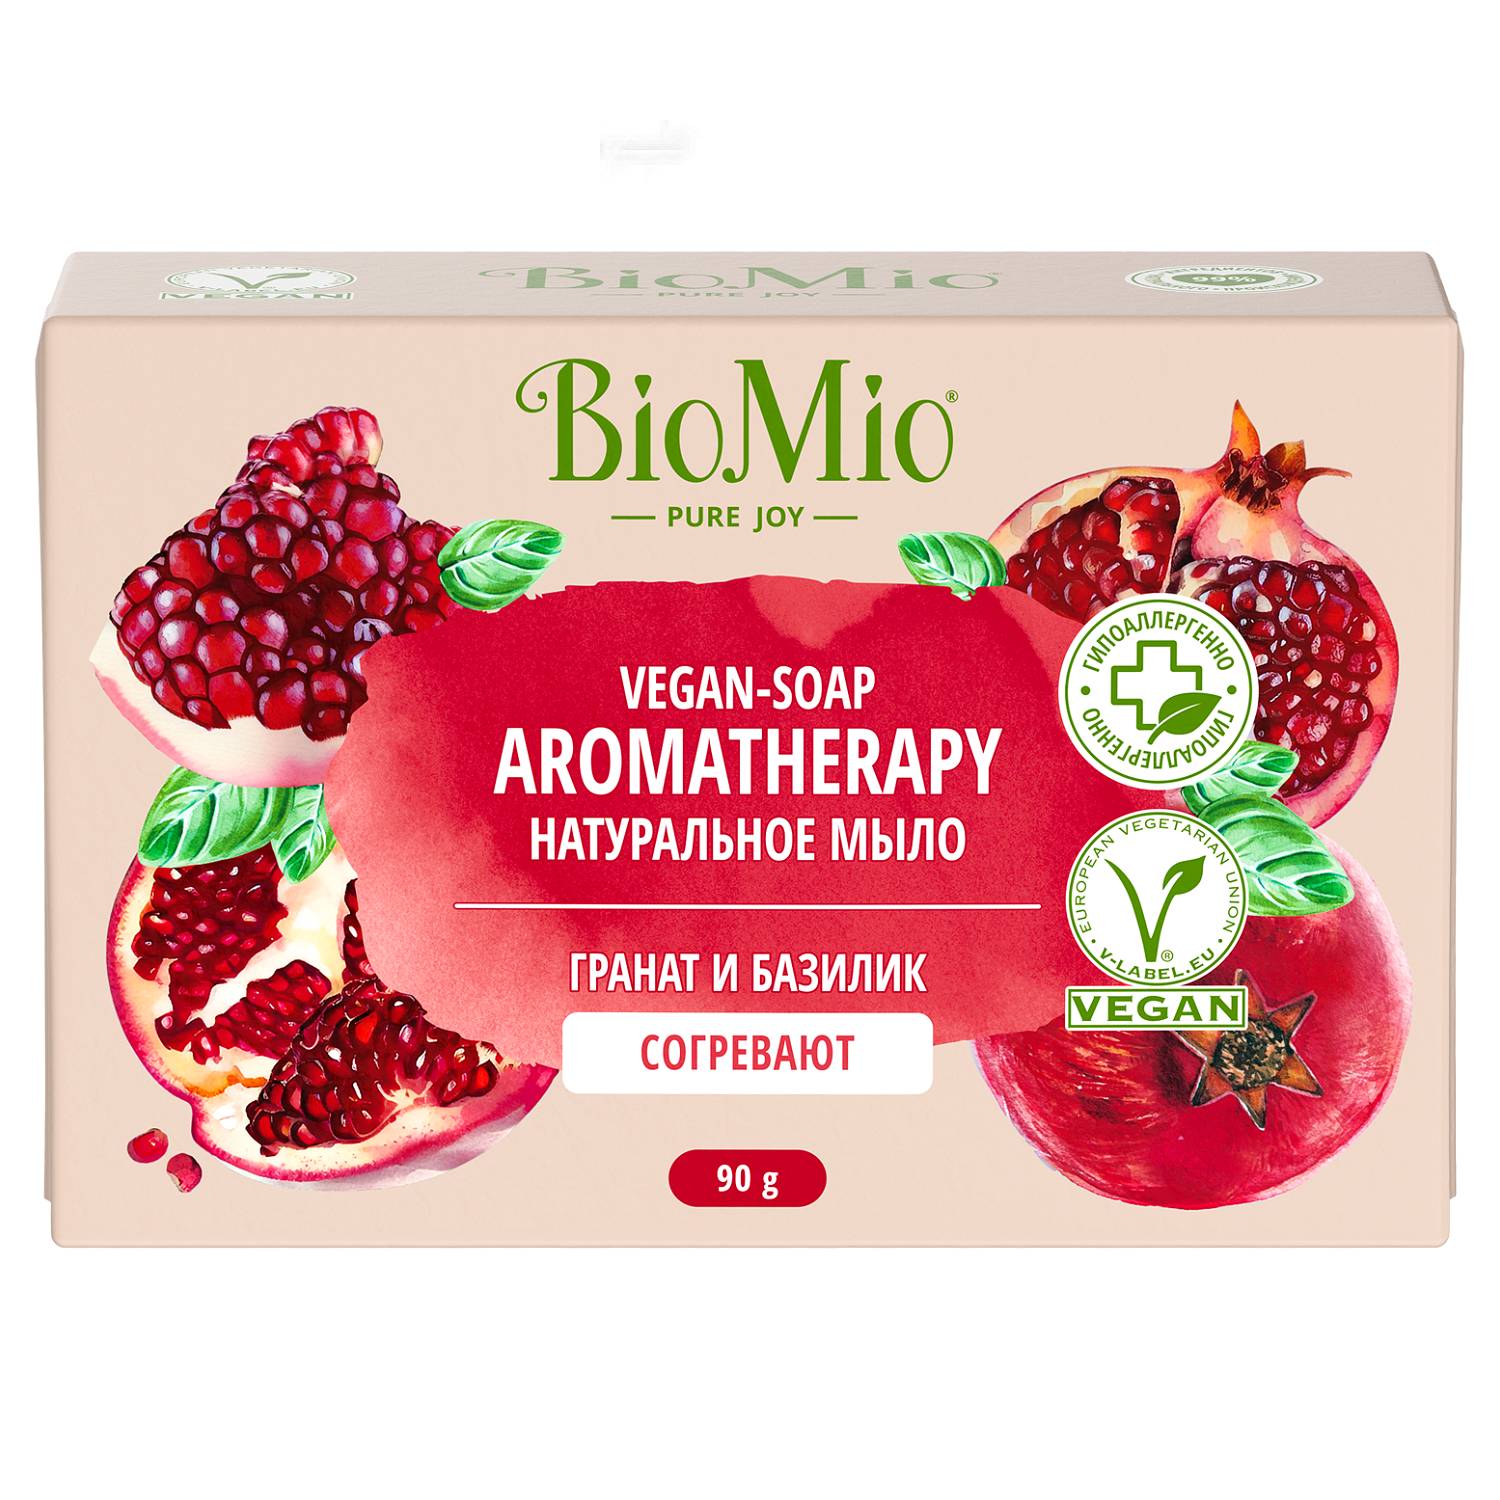 BioMio Натуральное мыло Гранат и базилик Vegan Soap Aromatherapy, 90 г (BioMio, Мыло)